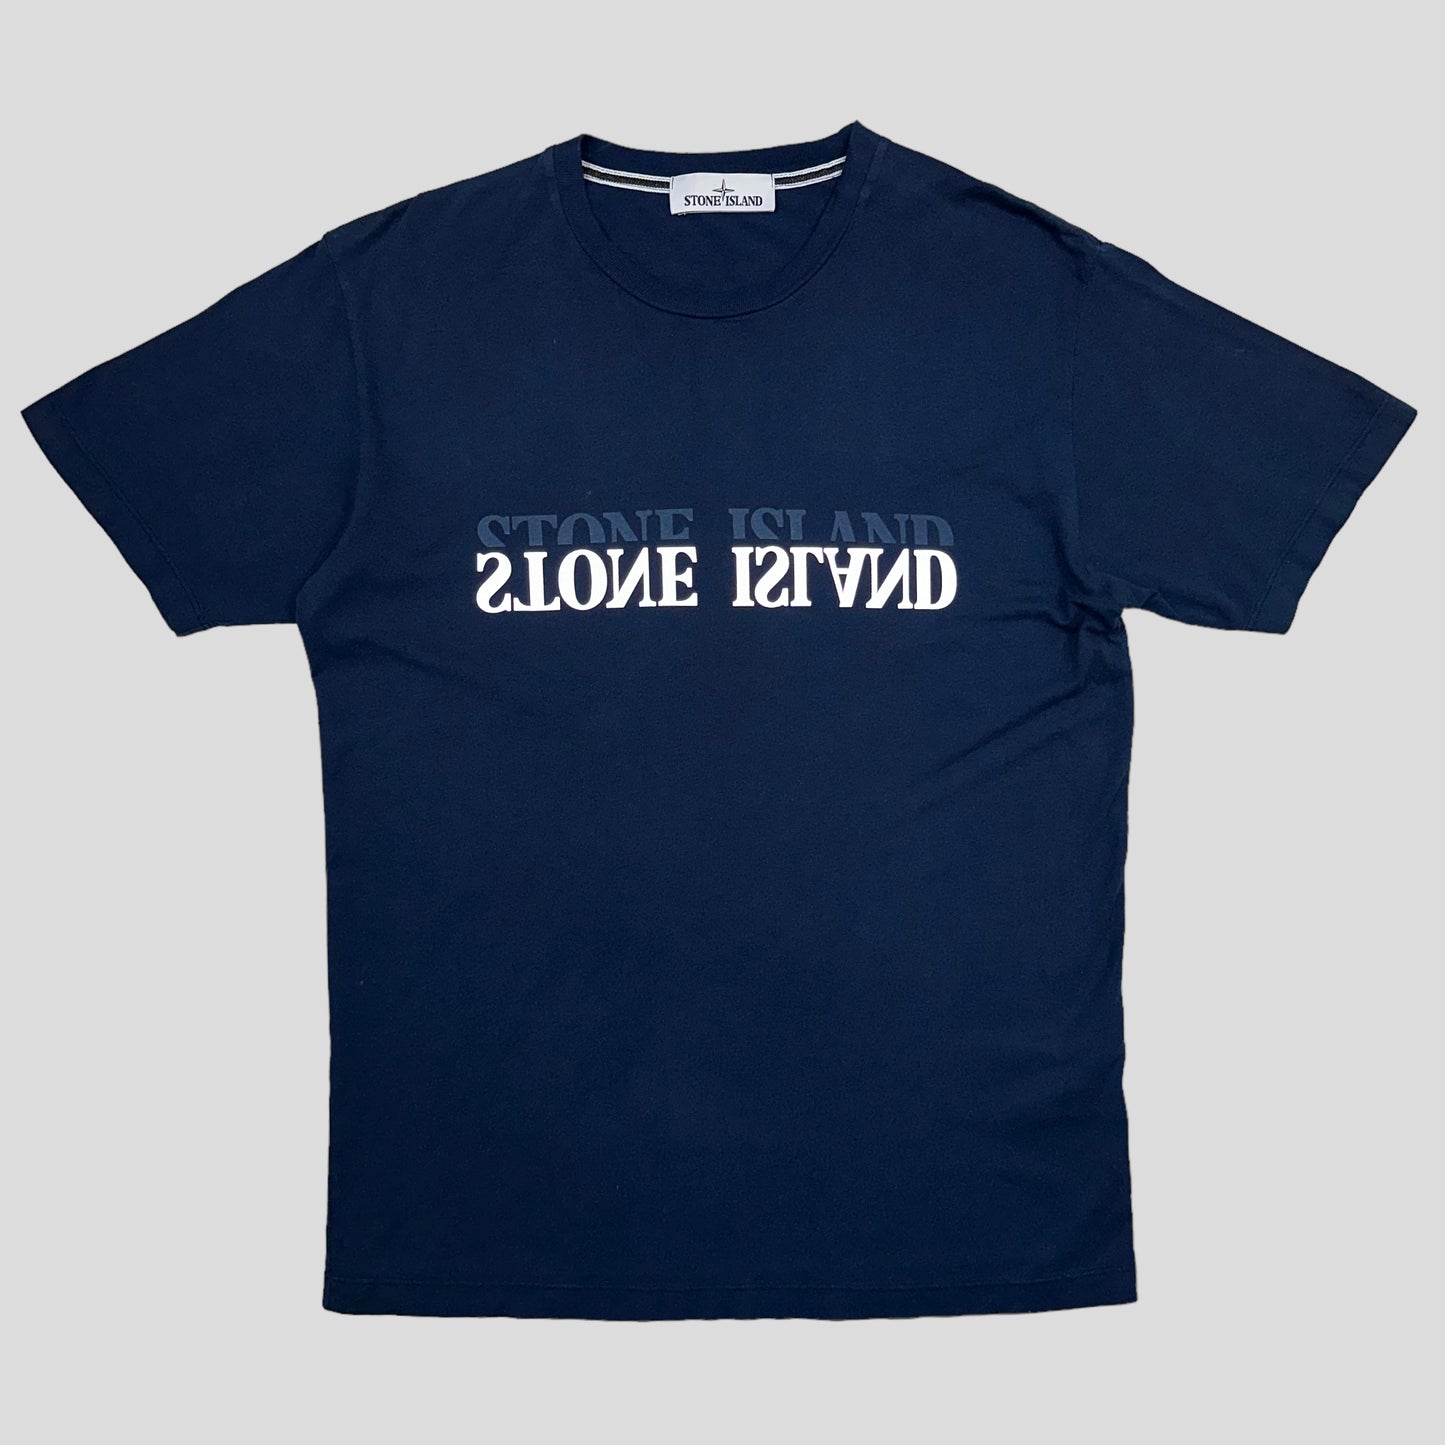 Stone Island Reflective Graphic T-shirt - M